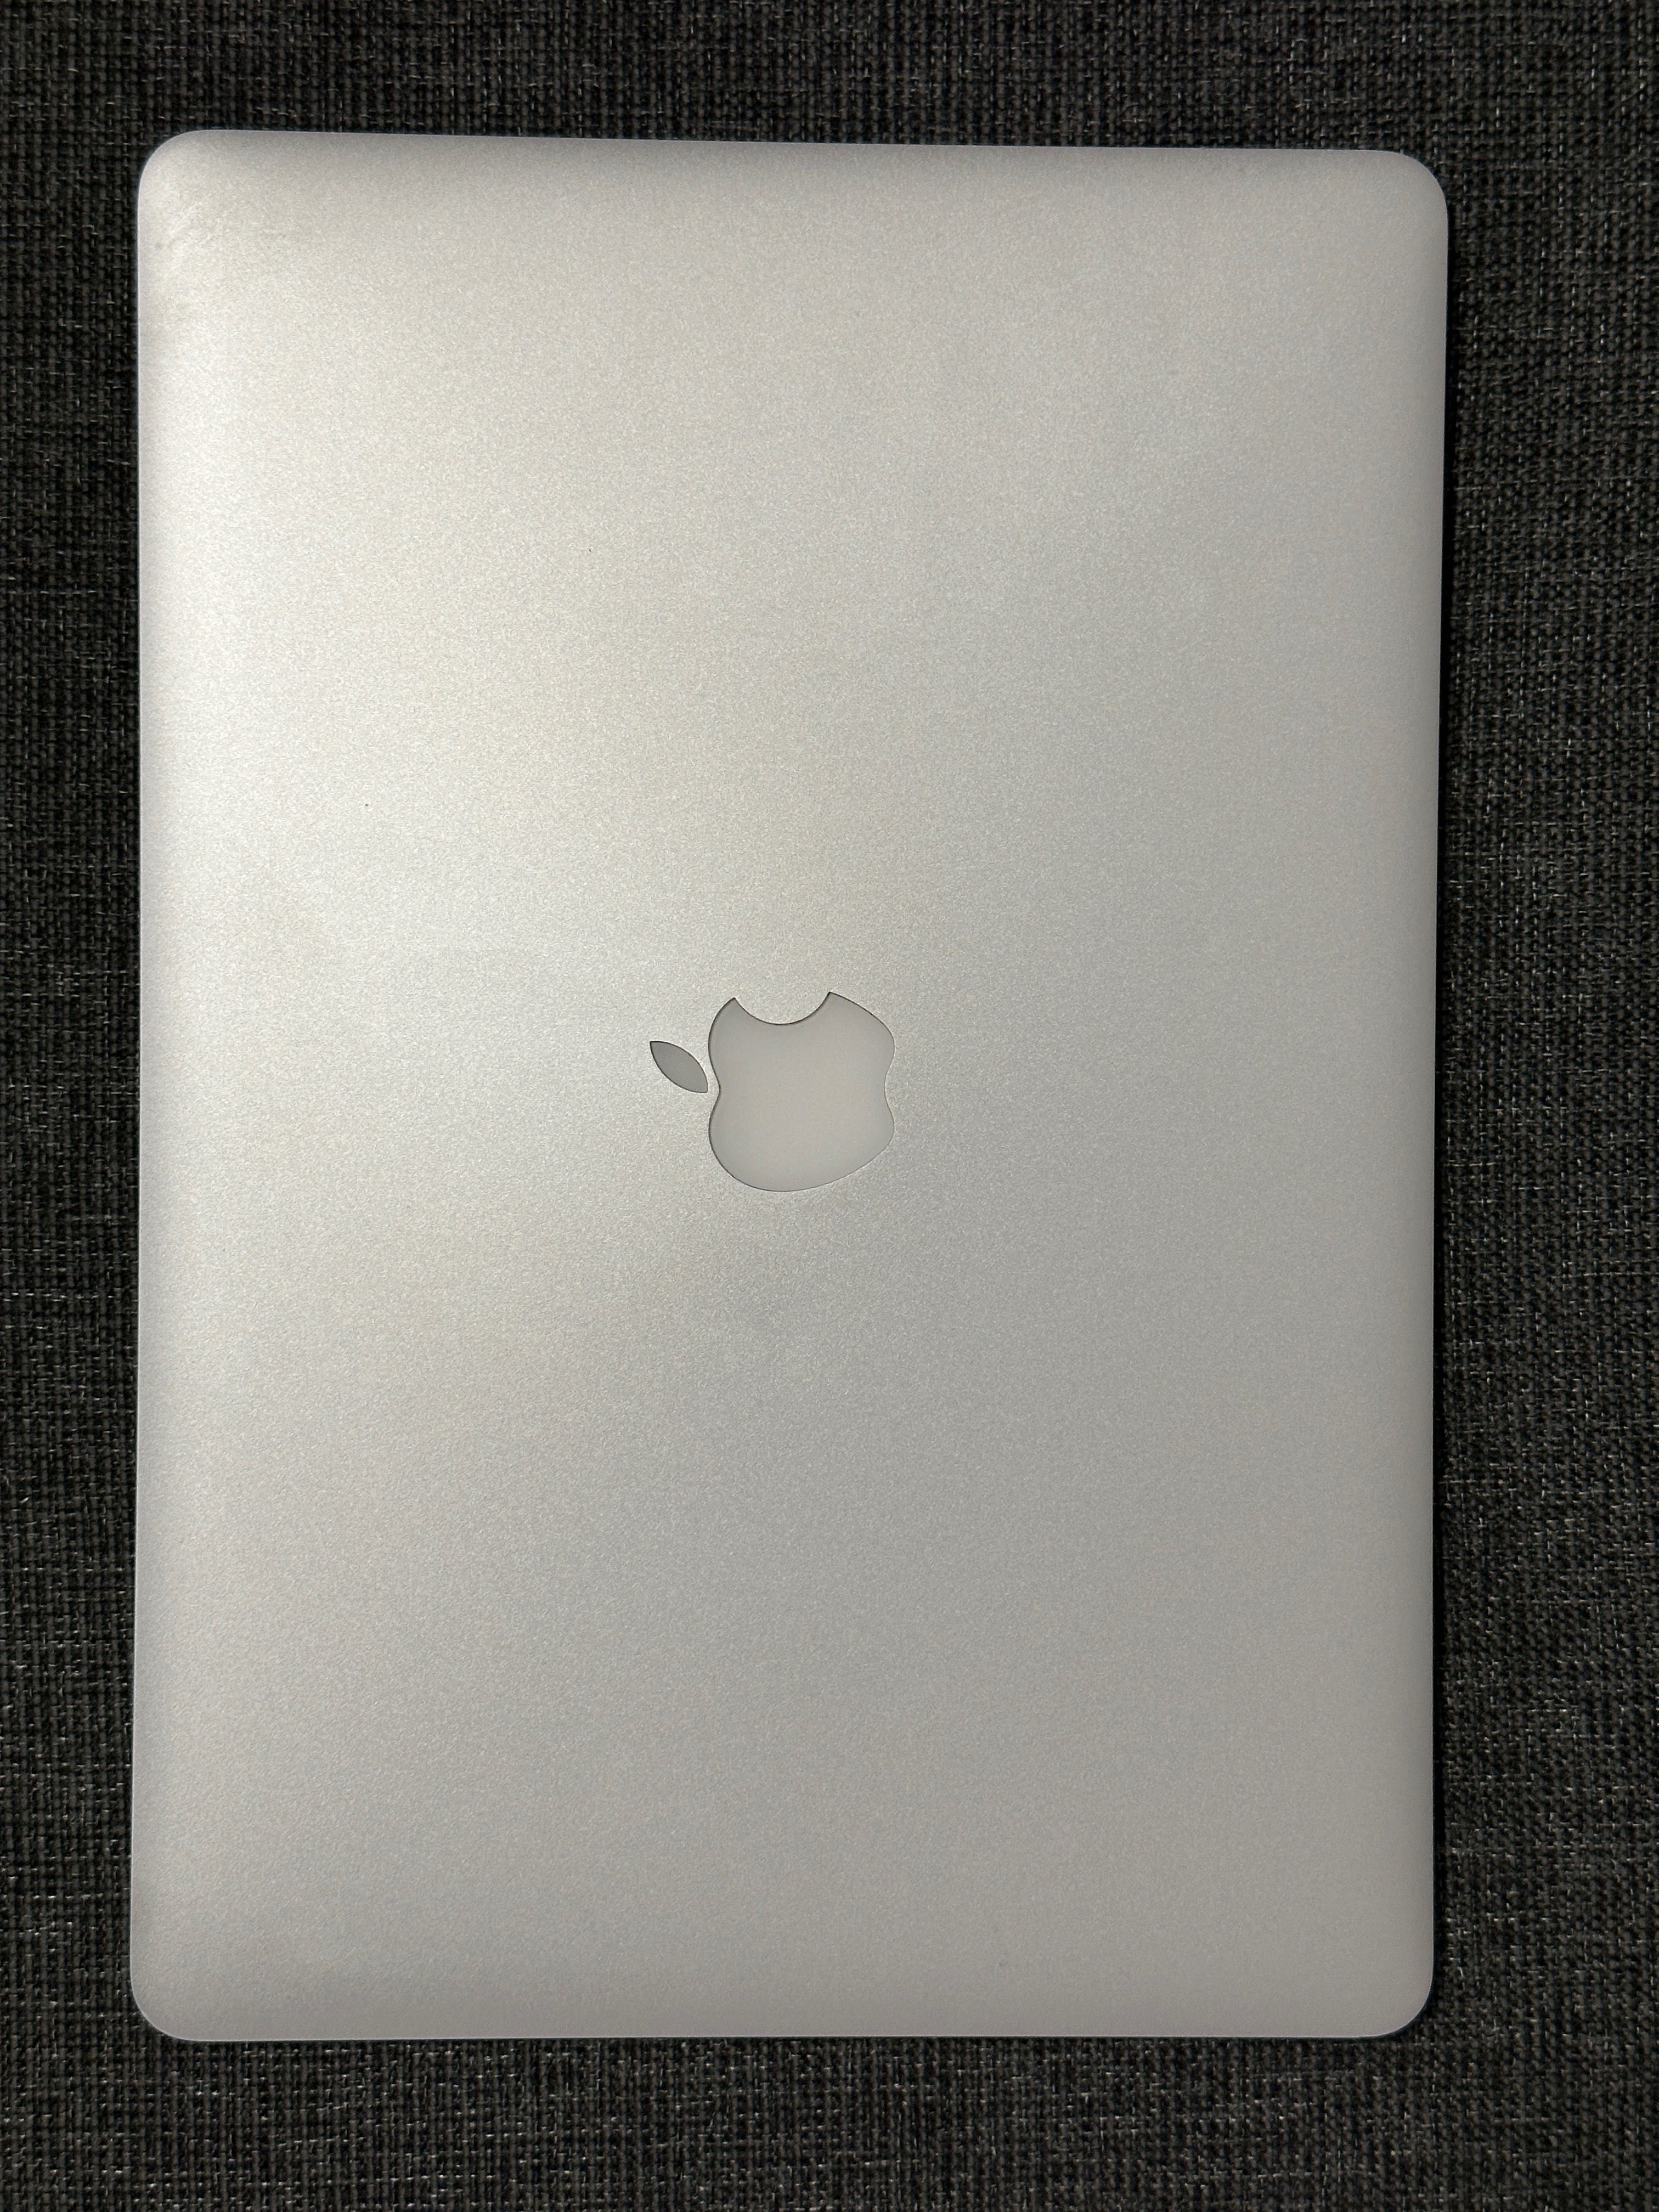 MacBook Pro Retina 15inch late 2013 + Magic Mouse